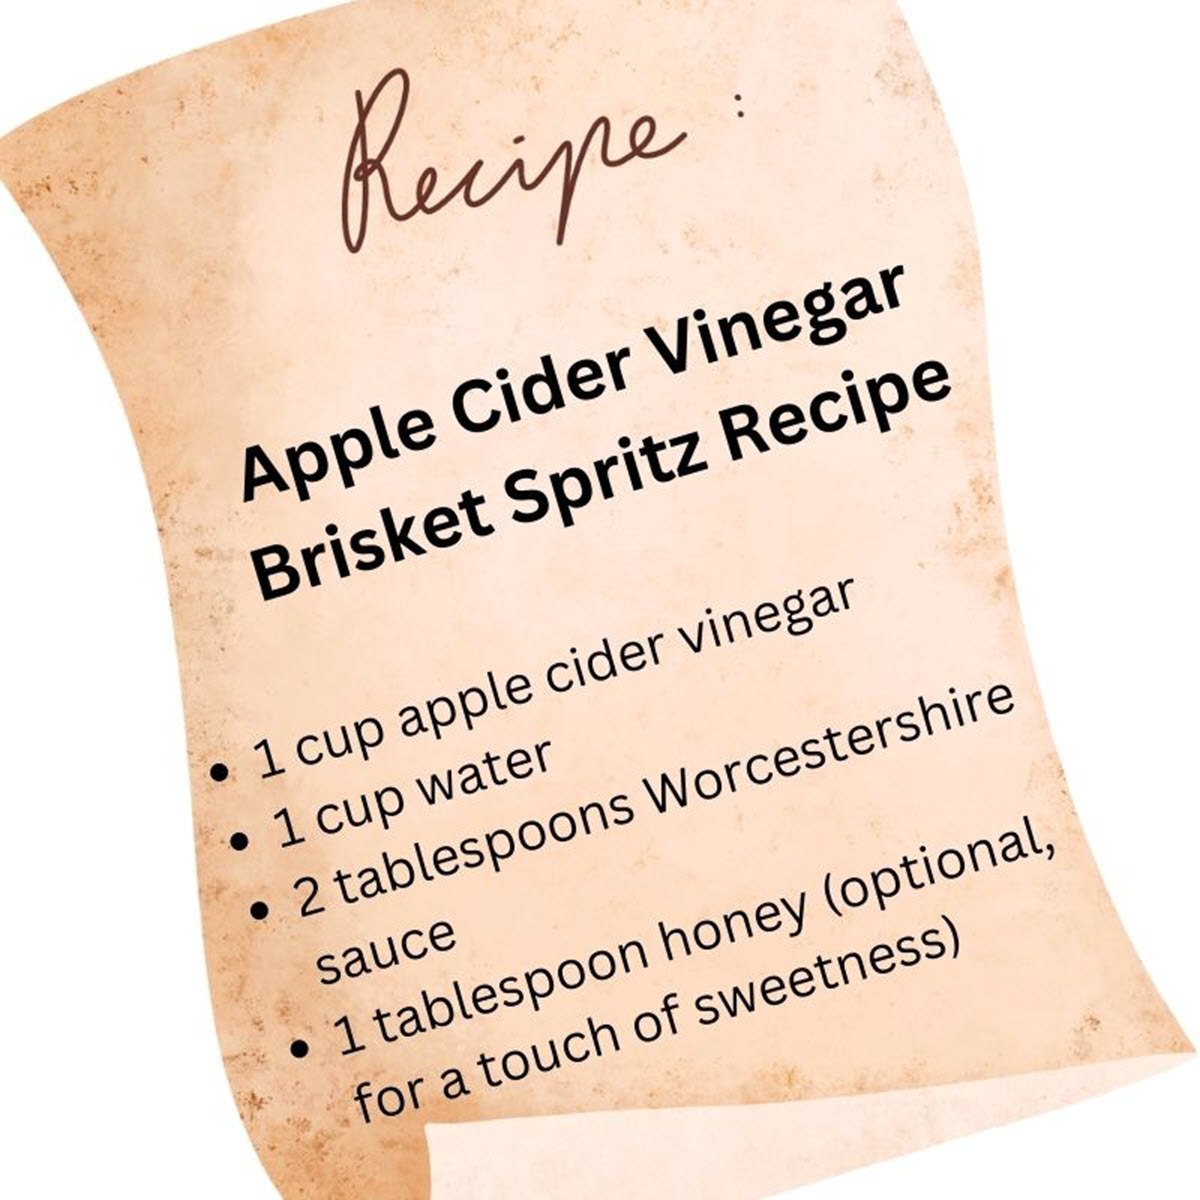 Apple cider vinegar brisket spritz recipe